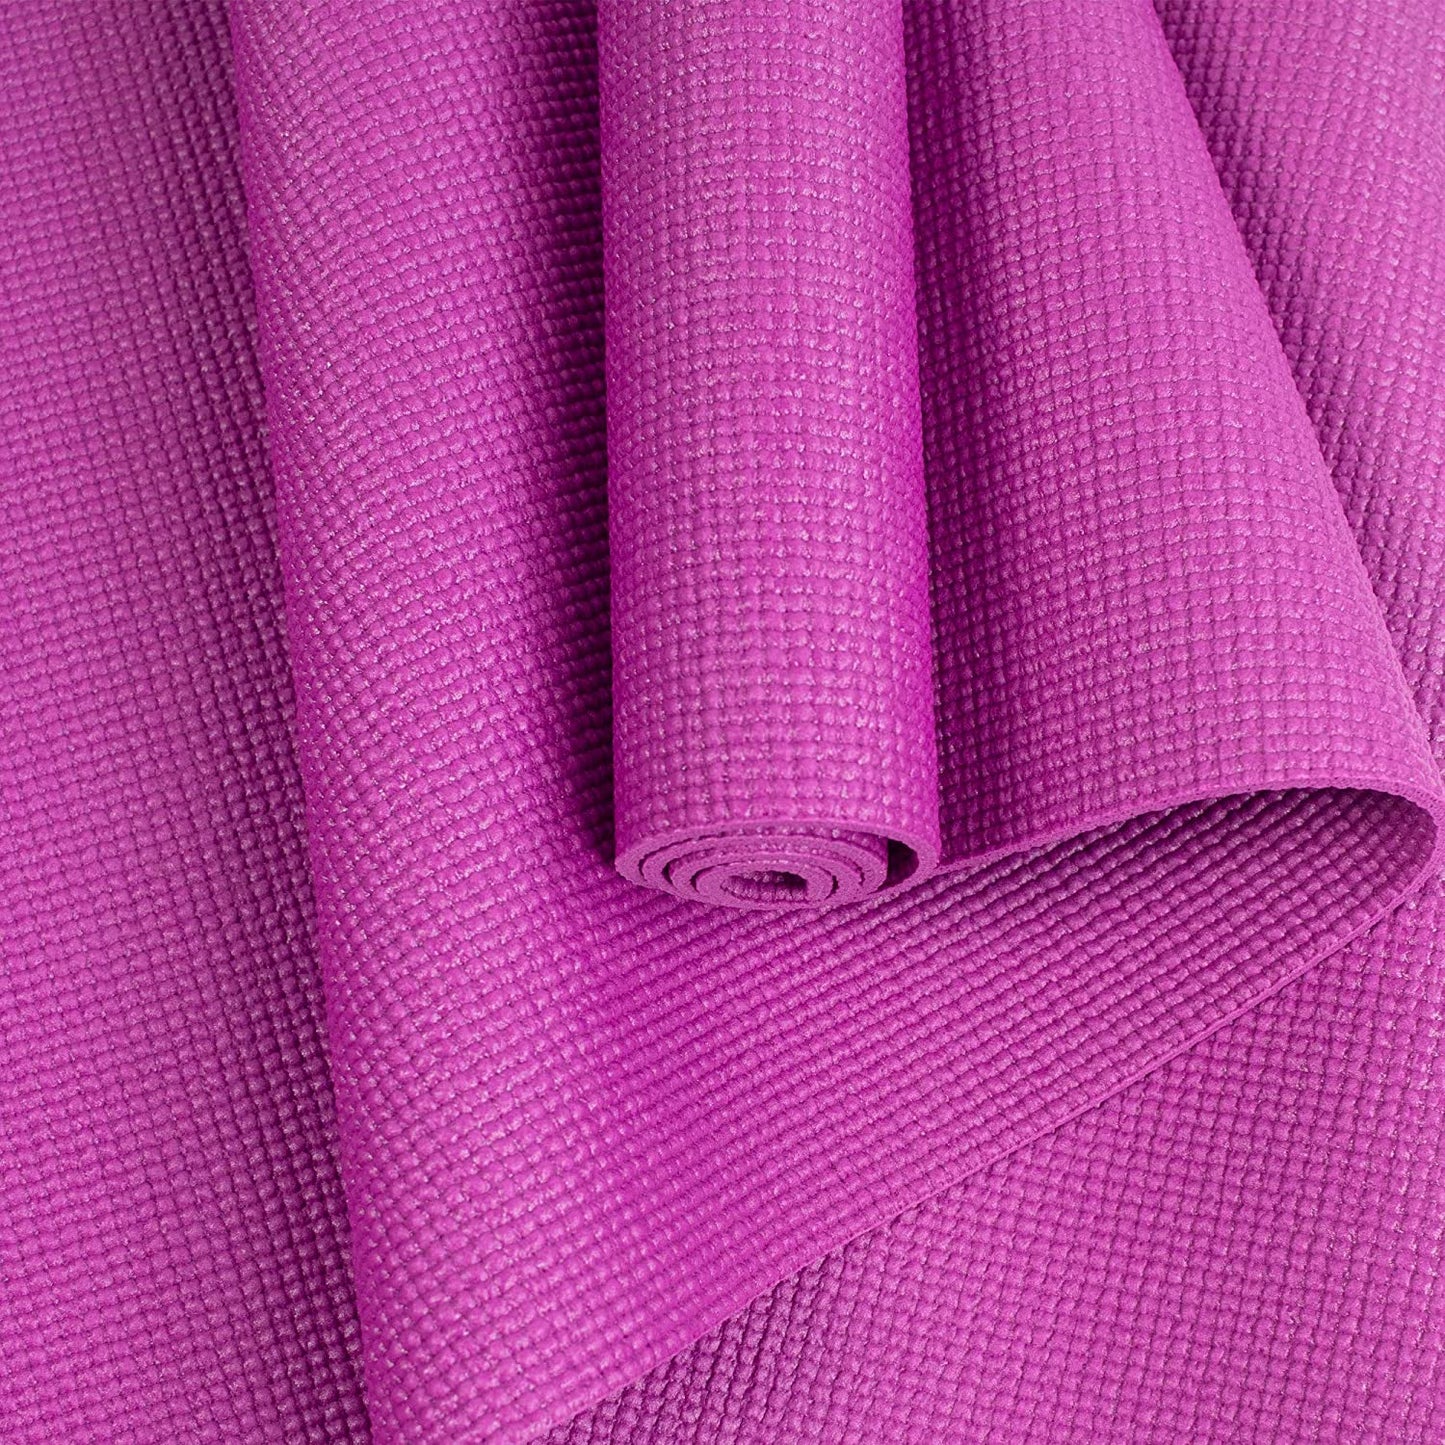 Entry Level Purple Yoga Mat Exercise Fitness Mat 173 x 61cm